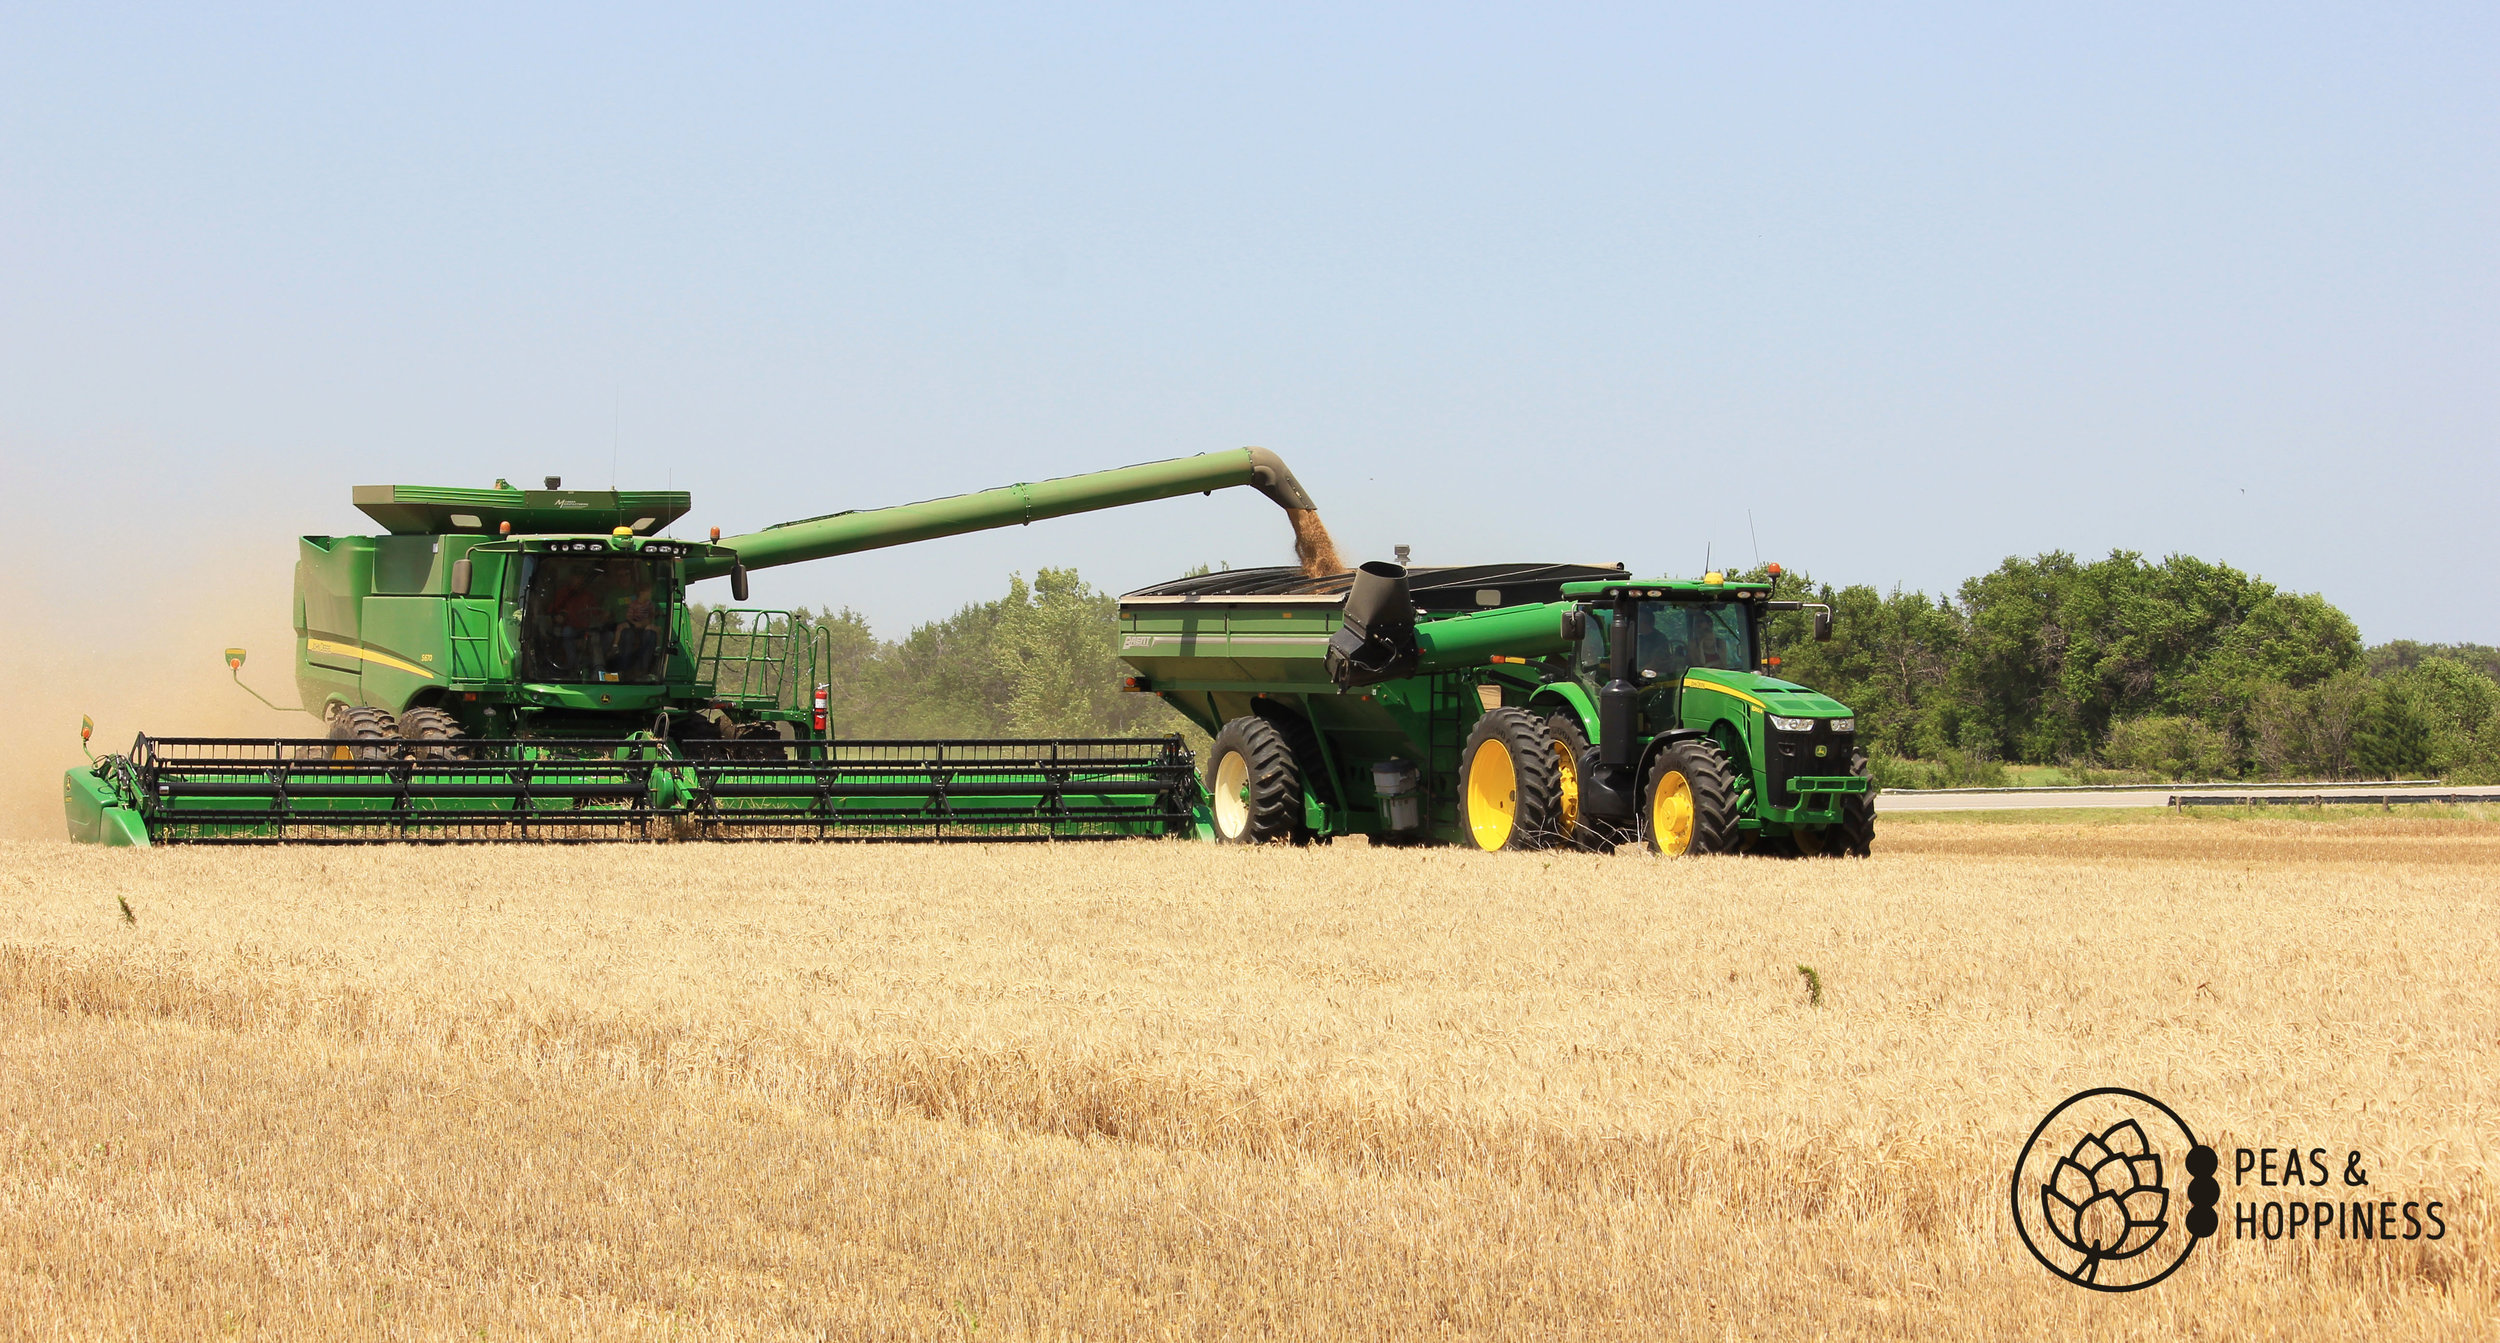 Kansas wheat harvest